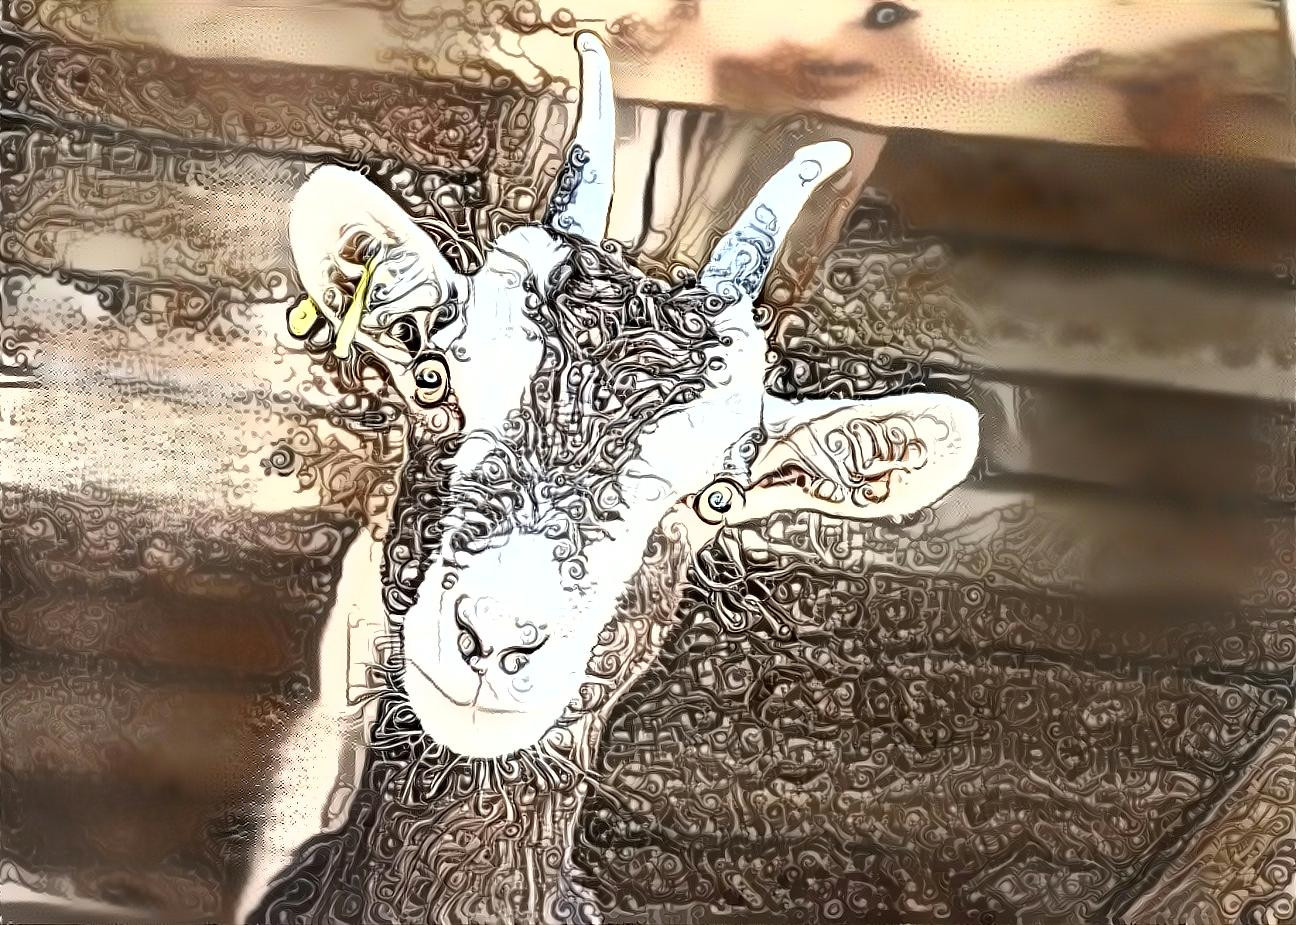 asdf goat